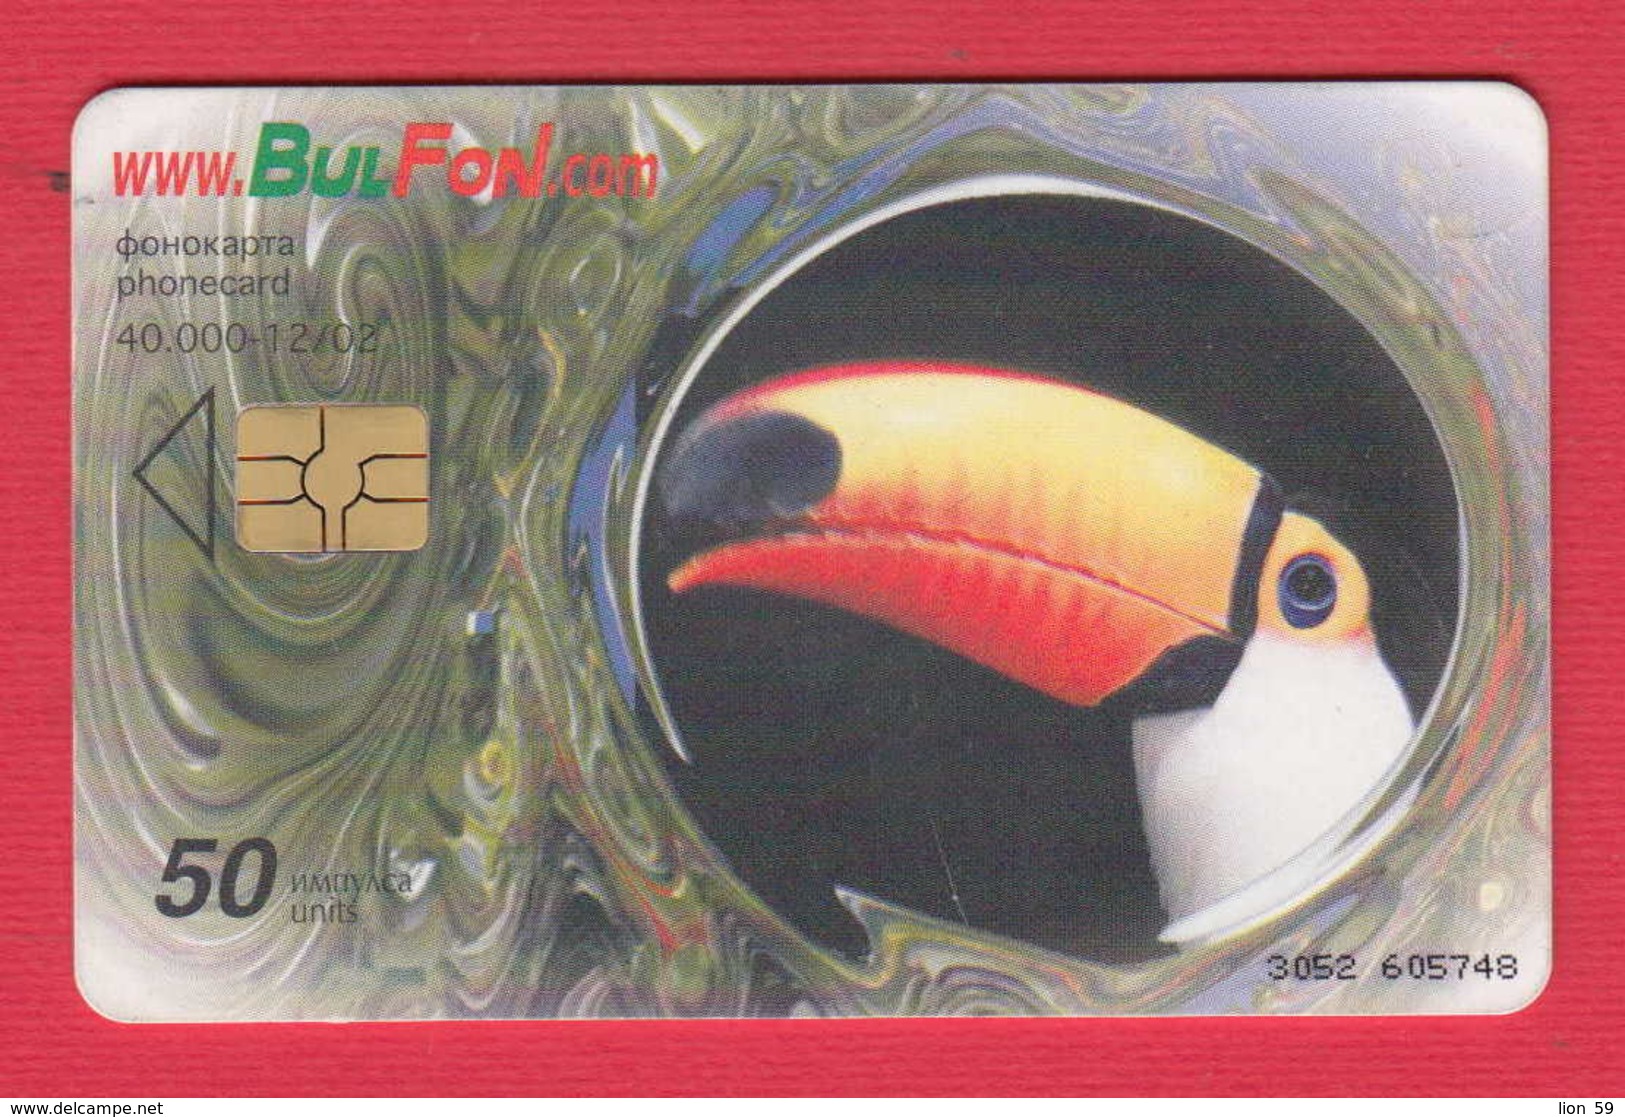 D842 / 12/02 - ANIMAL BIRD Parrots , LANDSCAPE , Chip BulFon Phonecard Télécarte Telefonkarten BULGARIA - Bulgaria